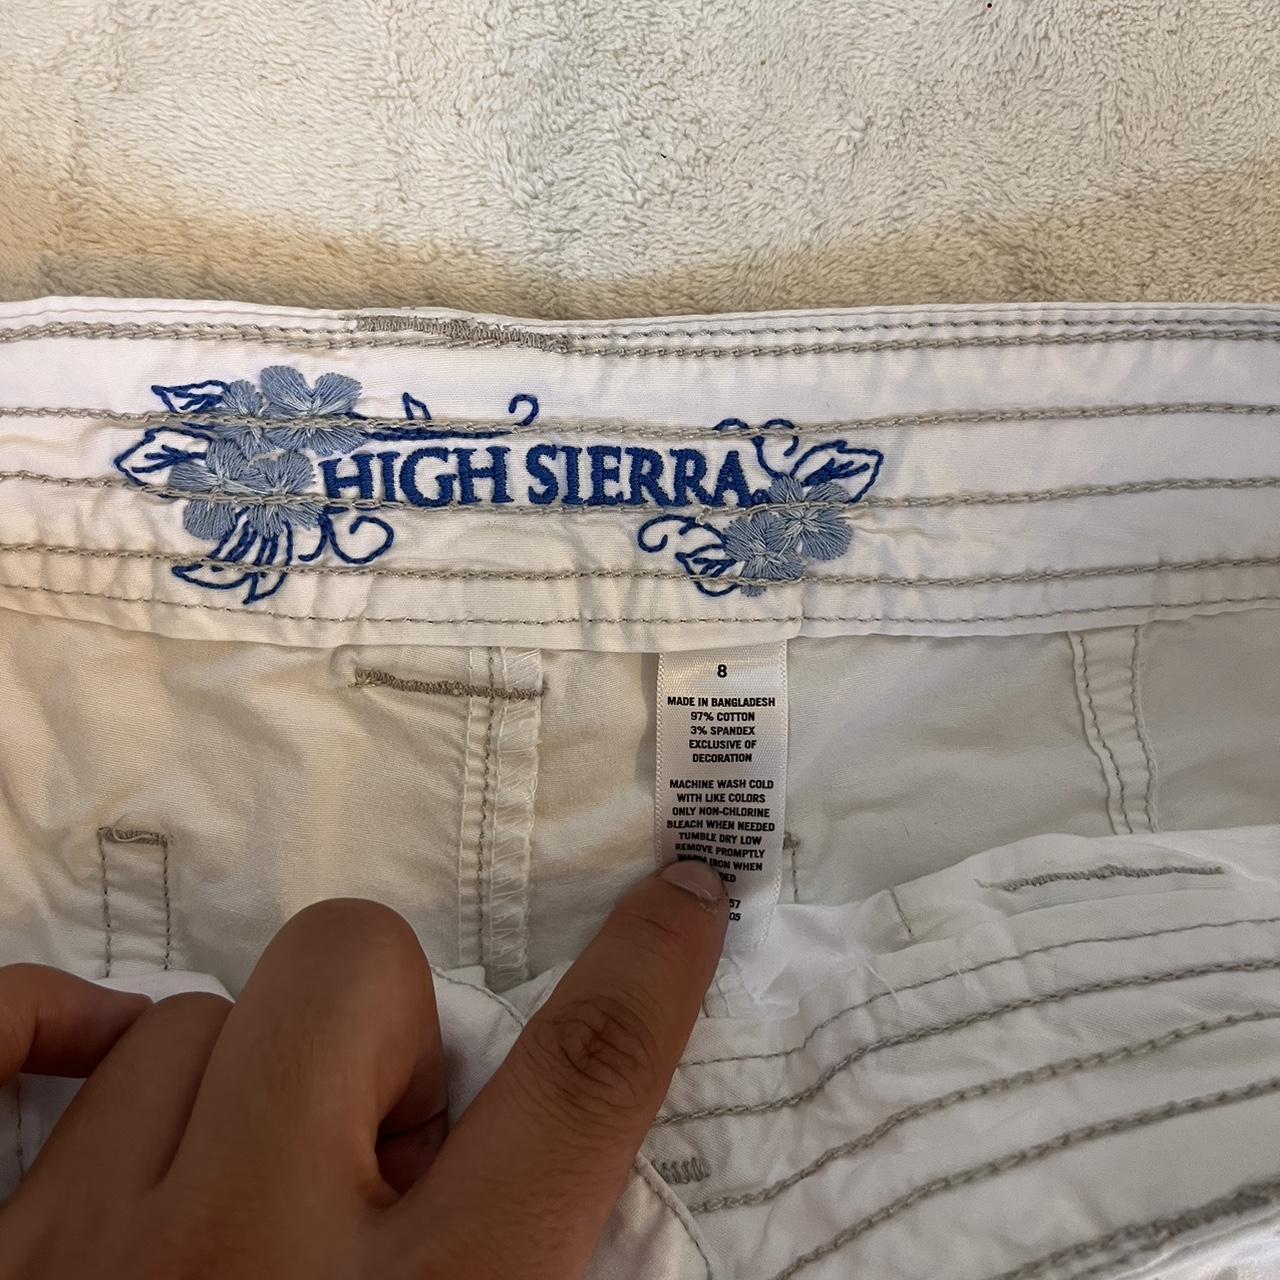 High Sierra Women's White Shorts (2)